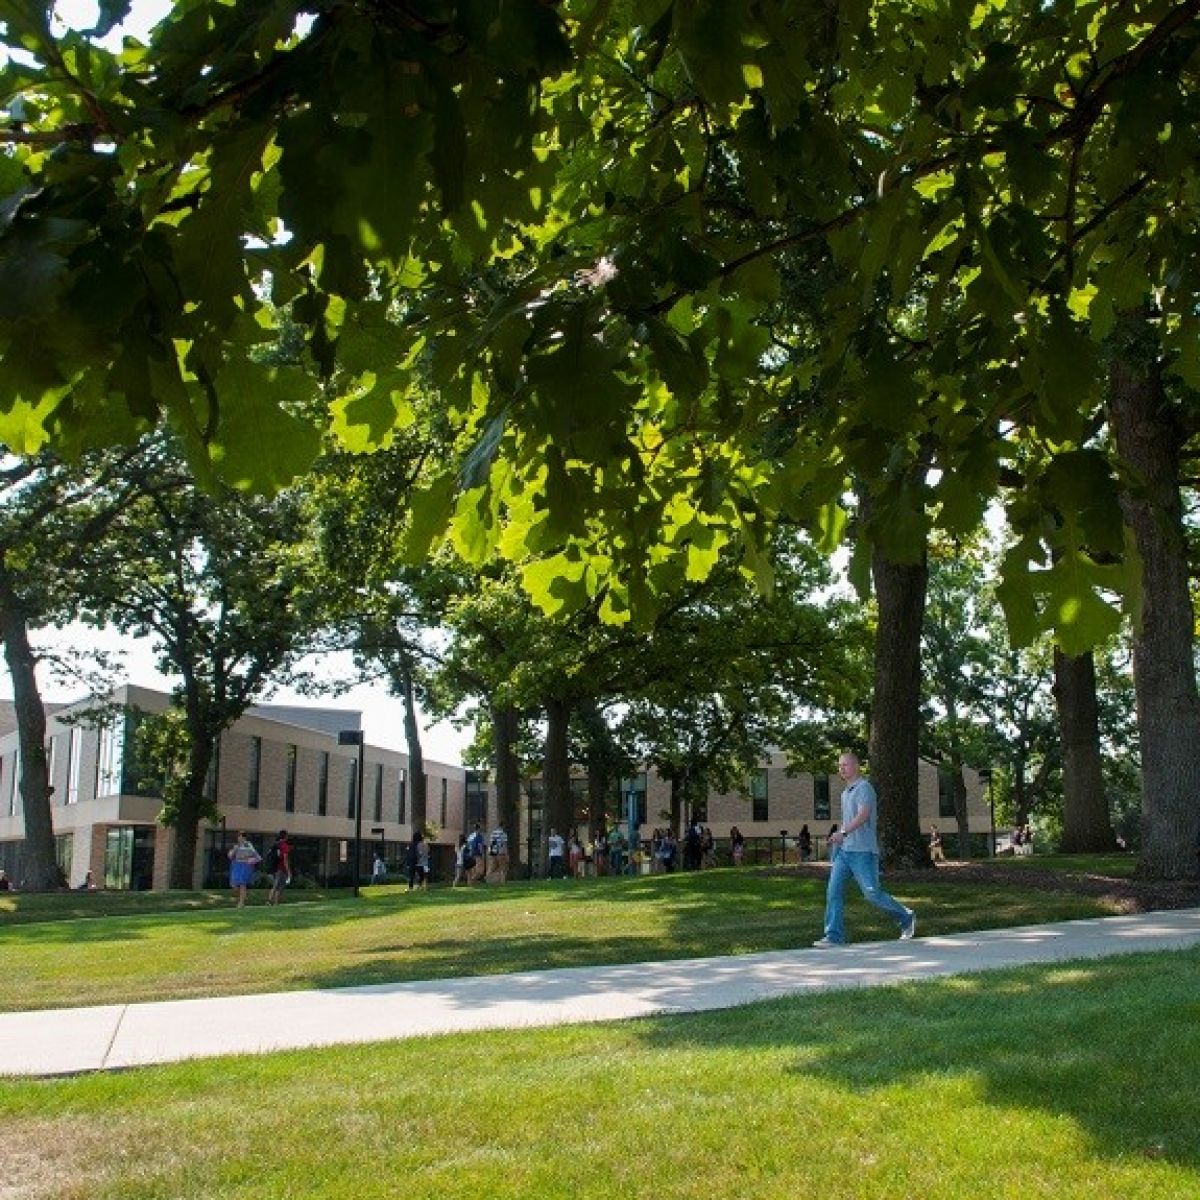 Sugar Grove Campus - Student Center in background